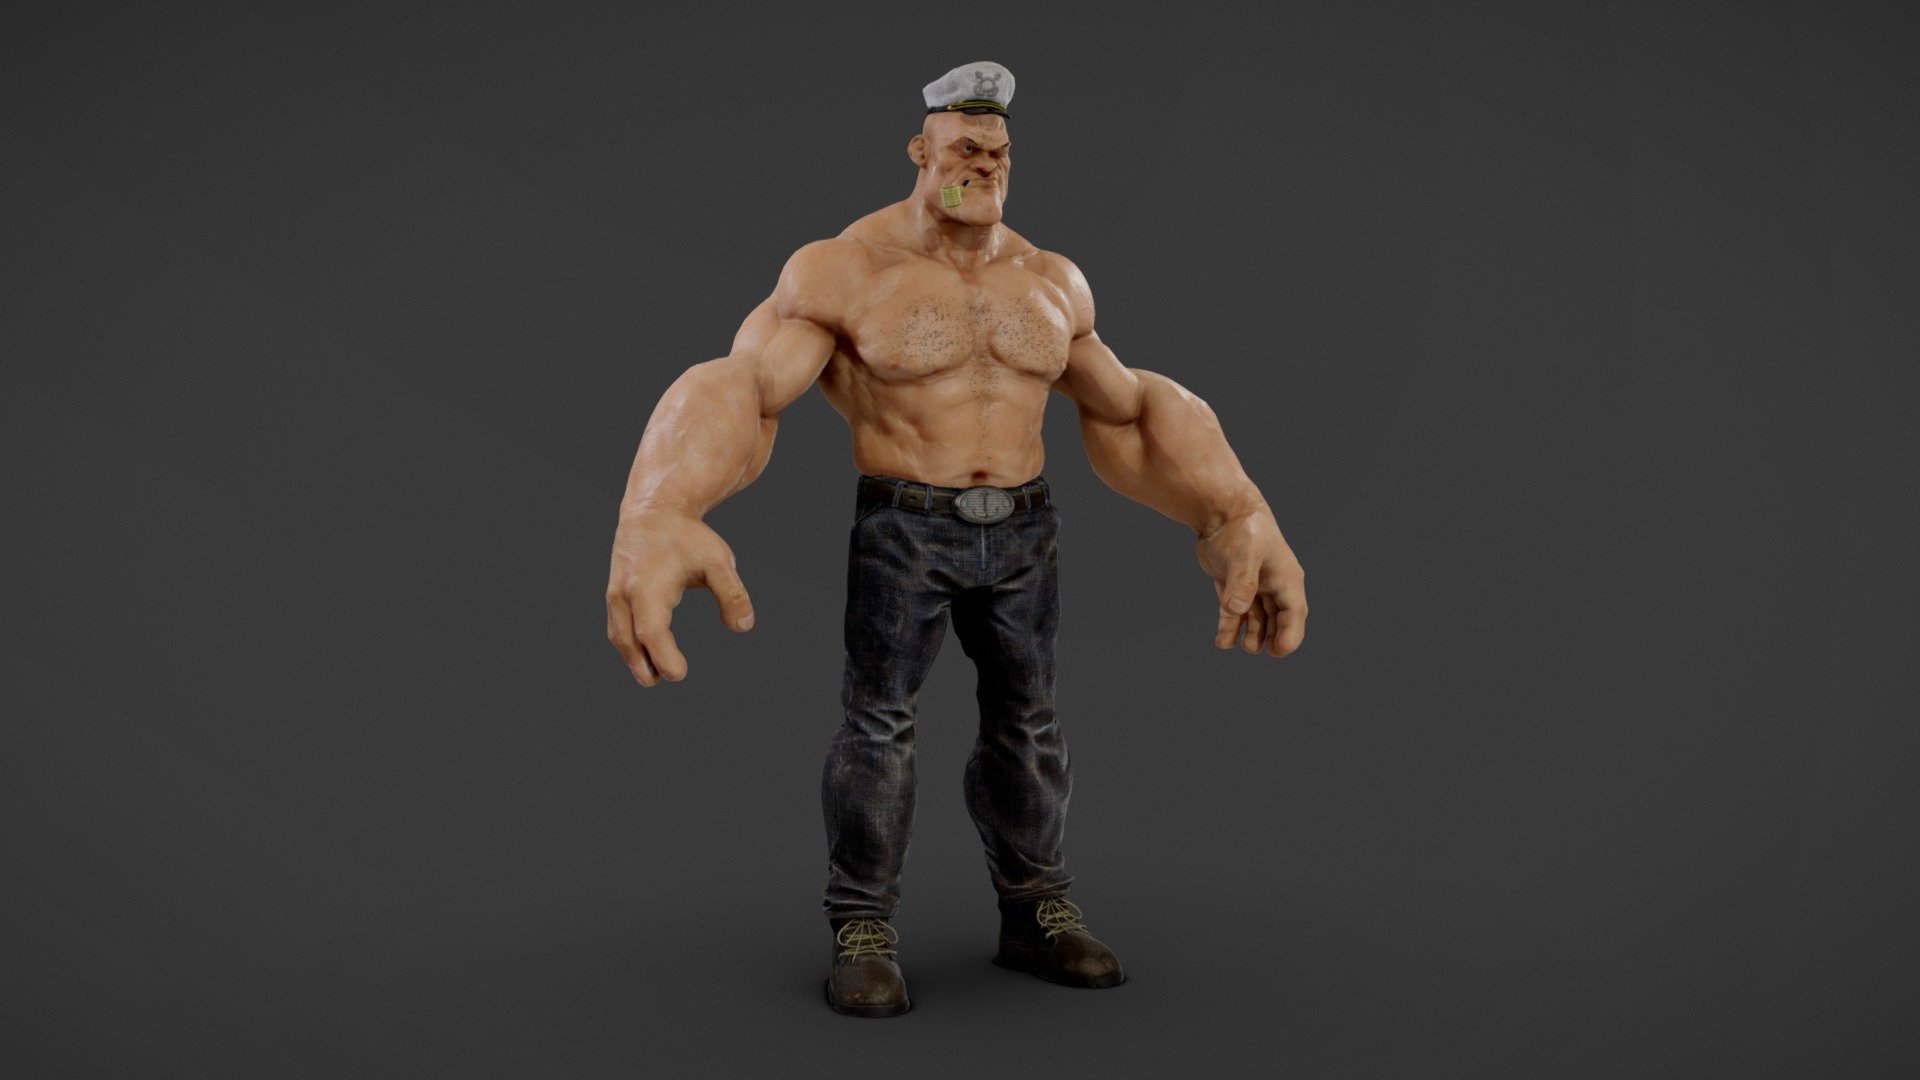 thowing up my Popeye character onto to show it off in the portfolio. https://www.artstation.com/artwork/qeVQL - Popeye - 3D model by MatthewKean 3d model